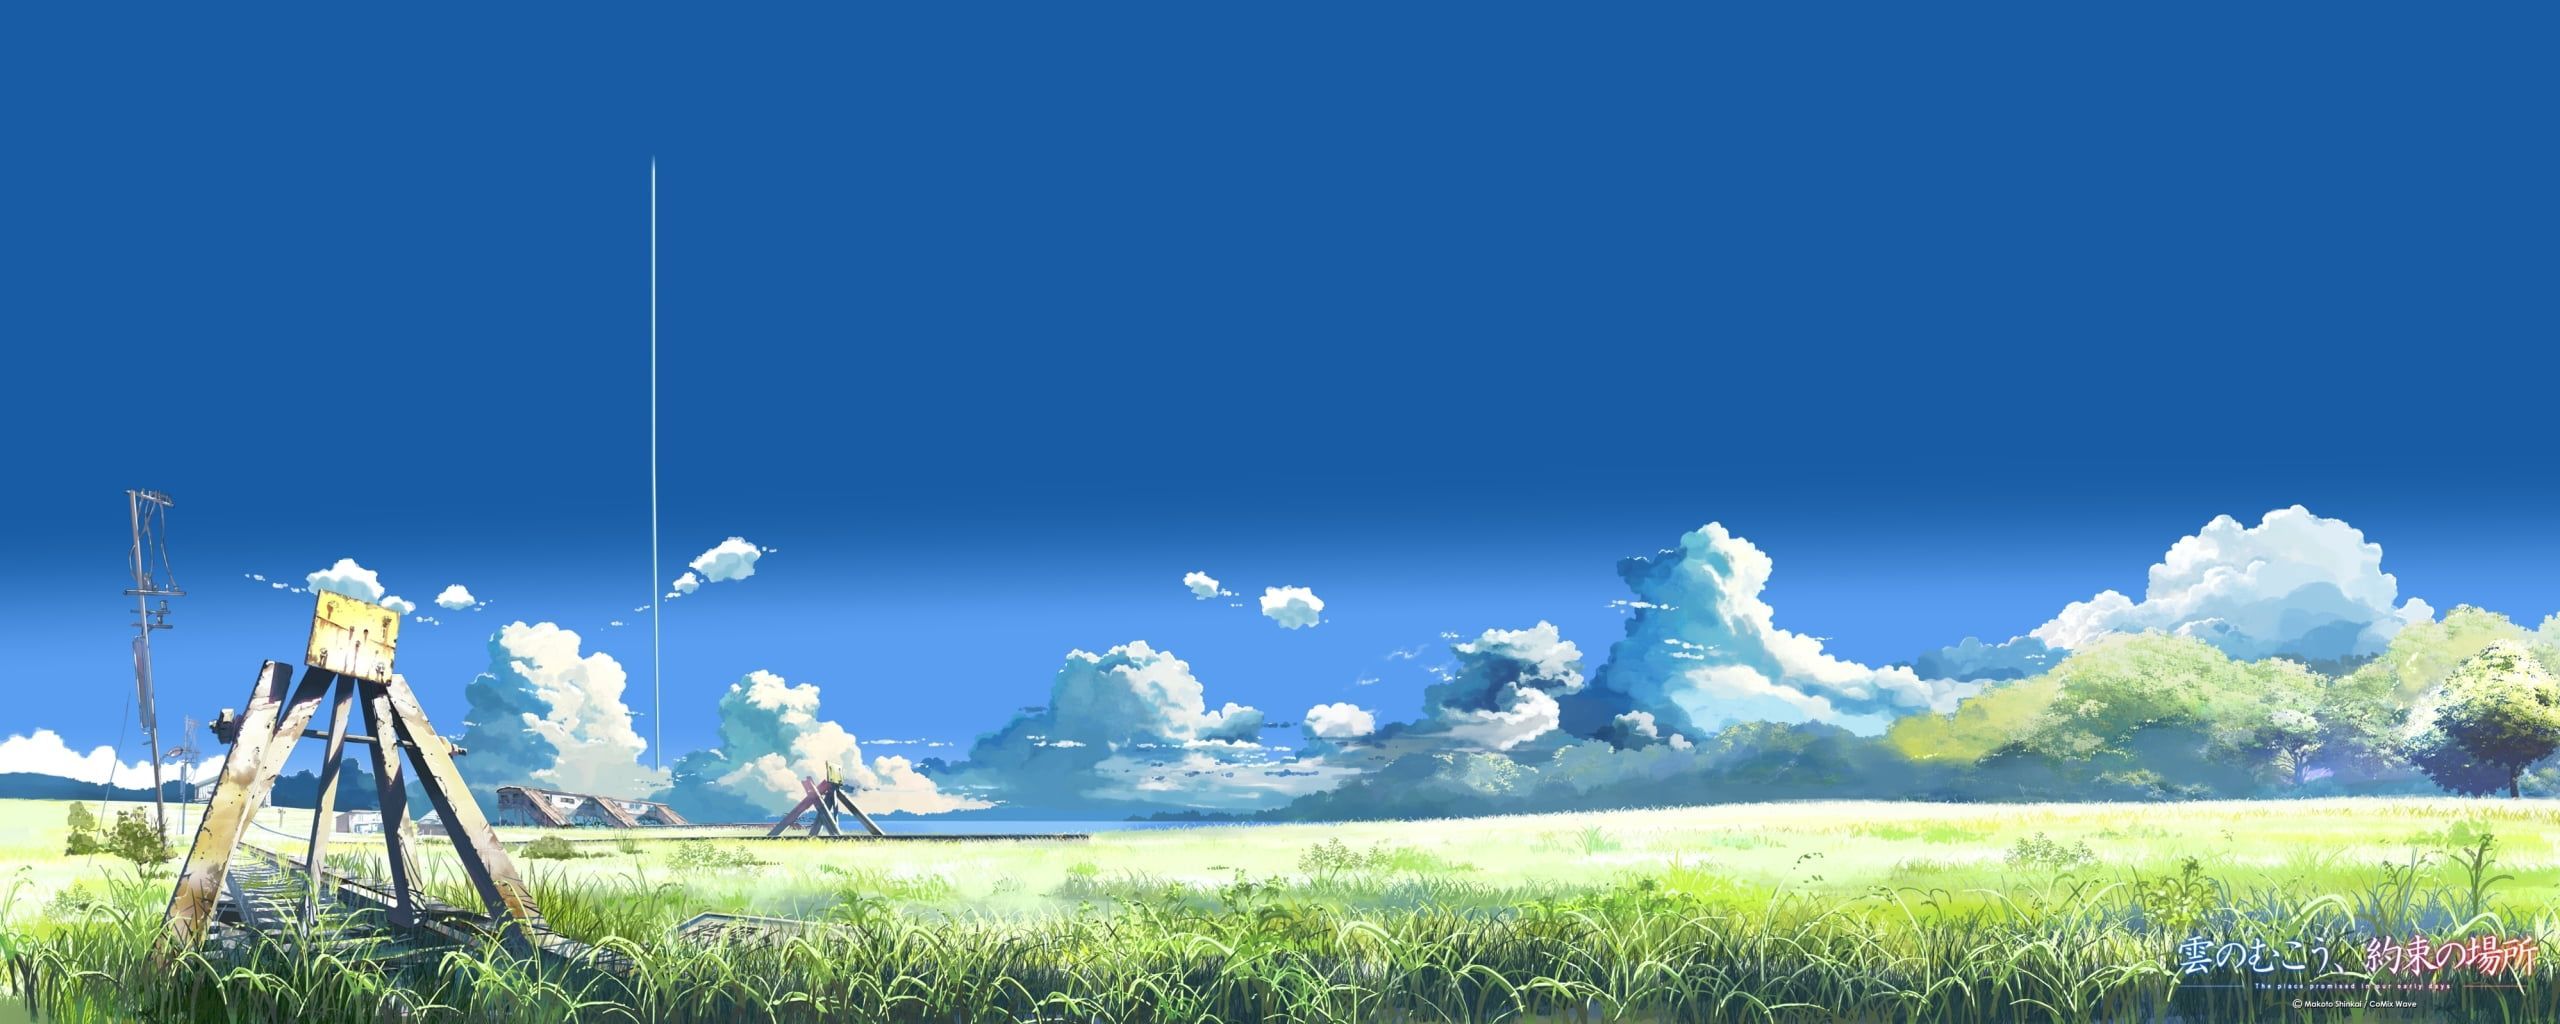 greenfield wallpaper #landscape #anime #manga Makoto Shinkai